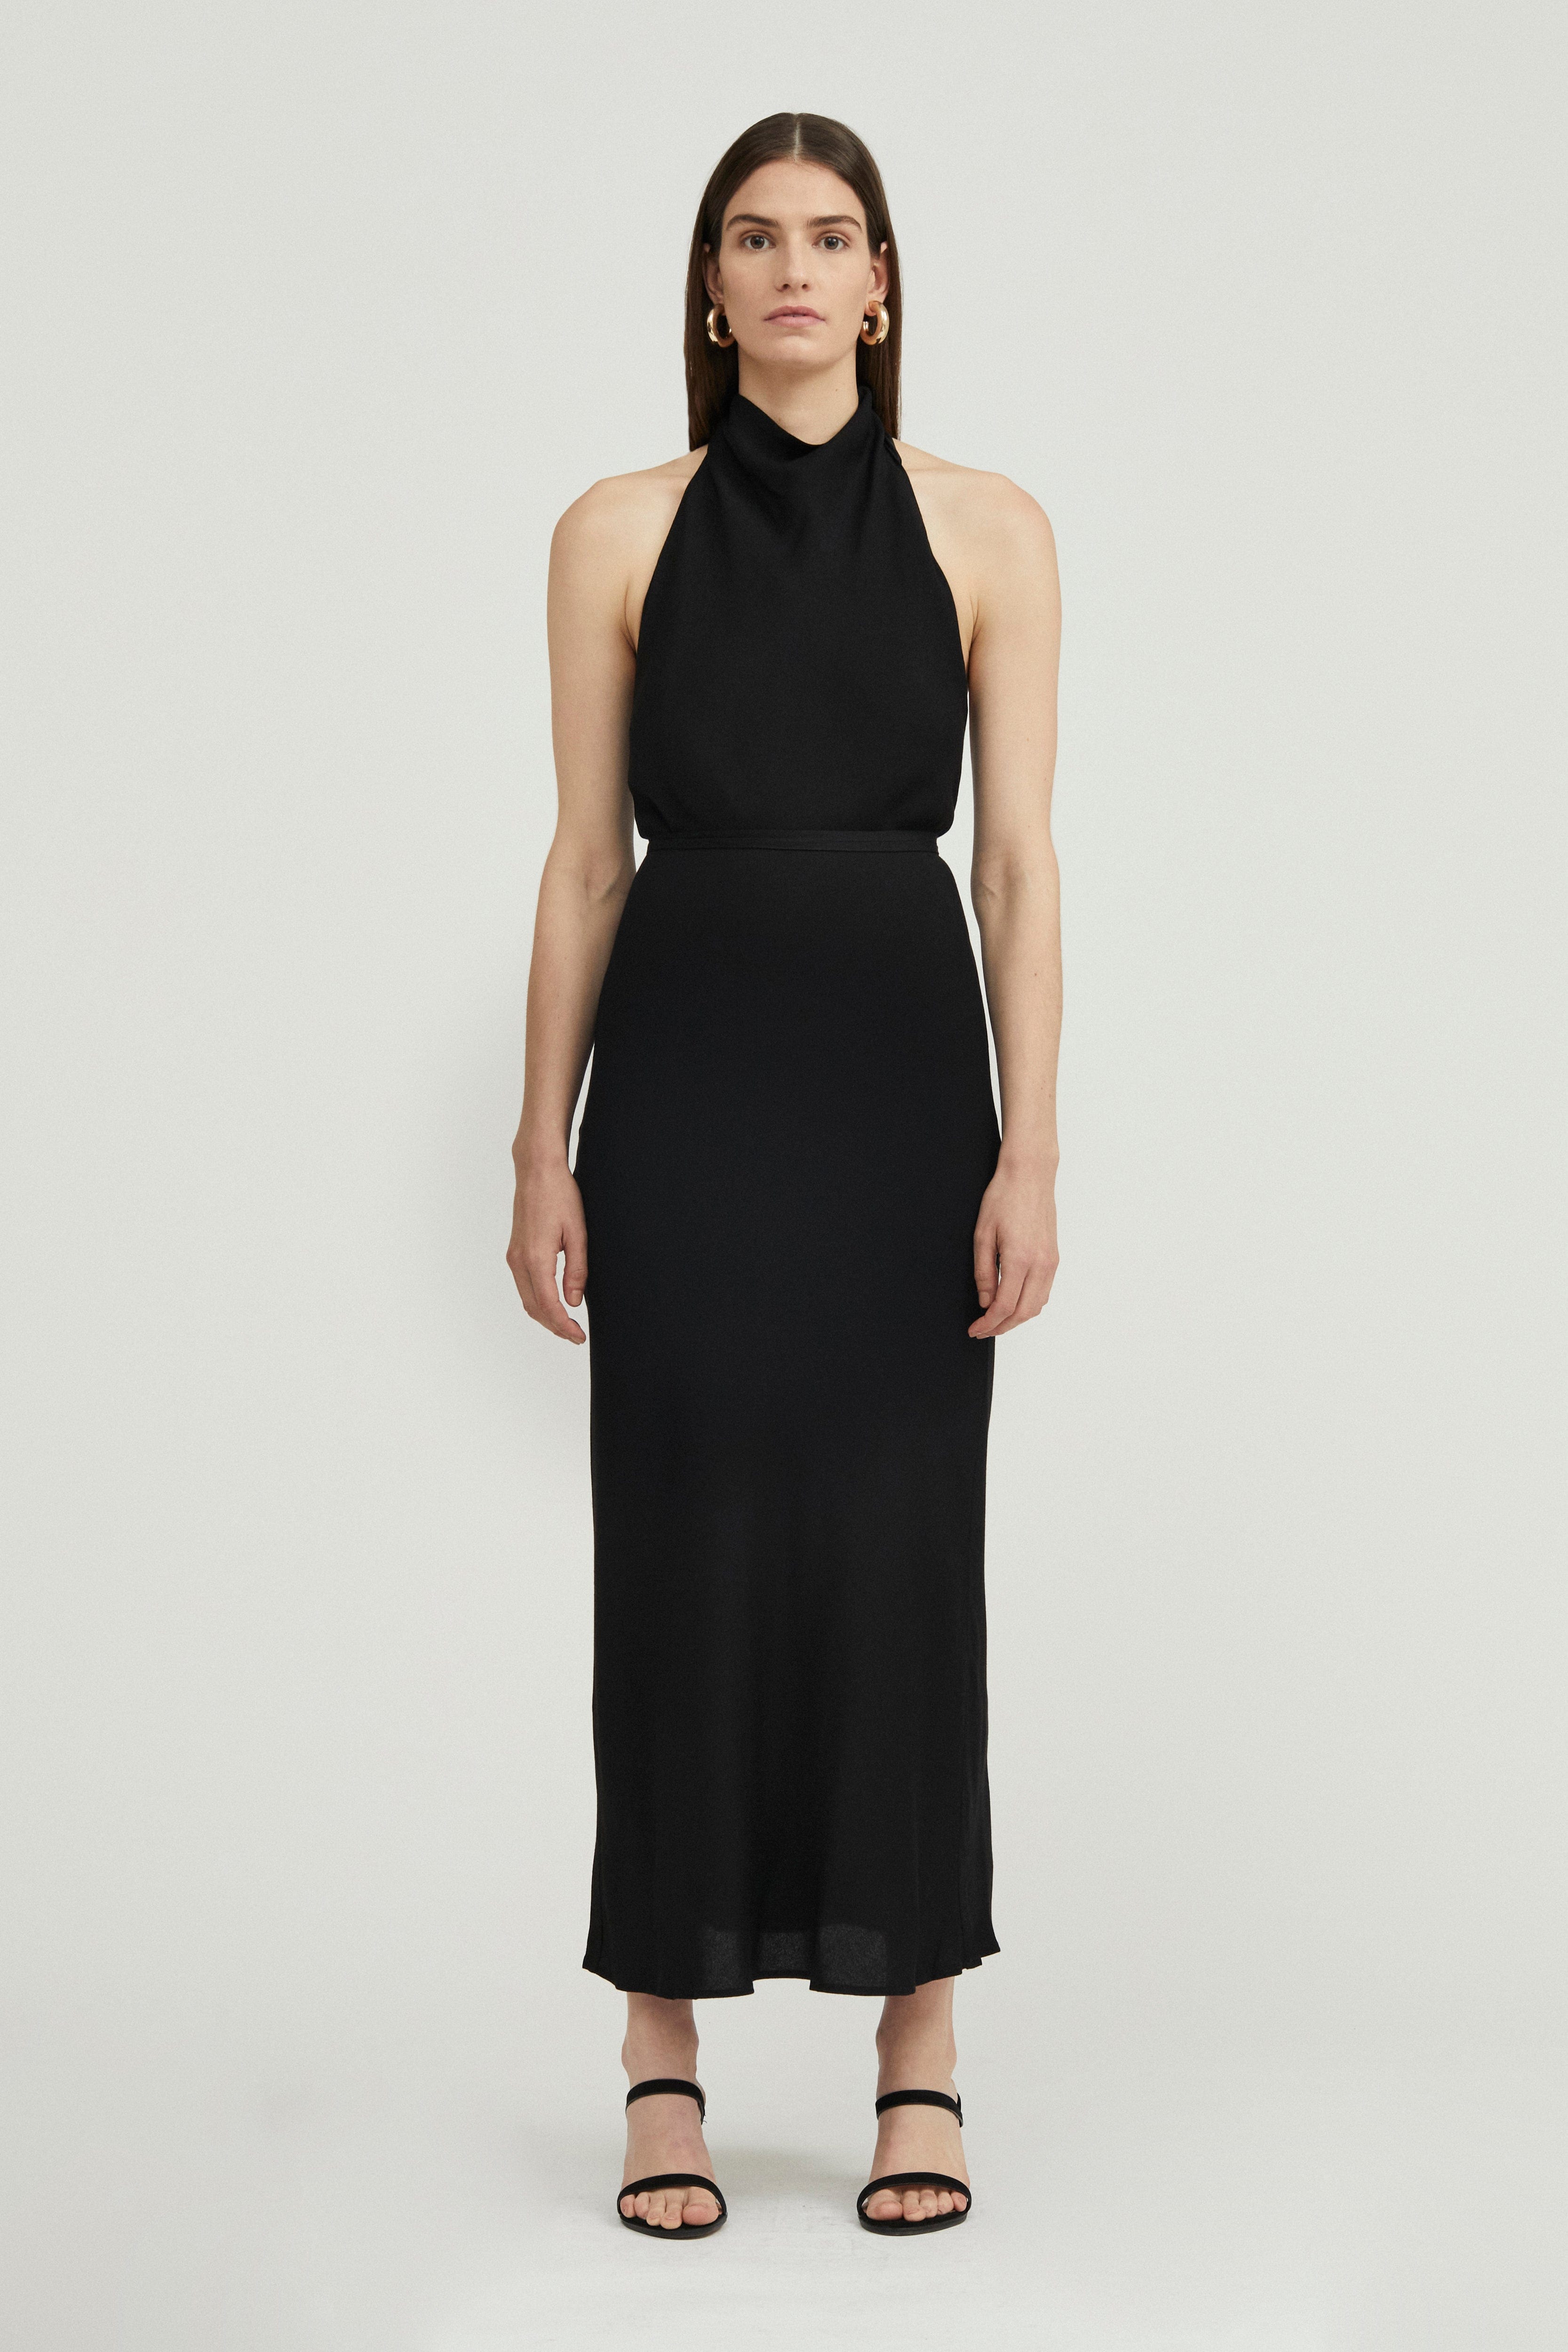 DRESSES | Third Form | Dresses for Women | Australian Designer — THIRD FORM